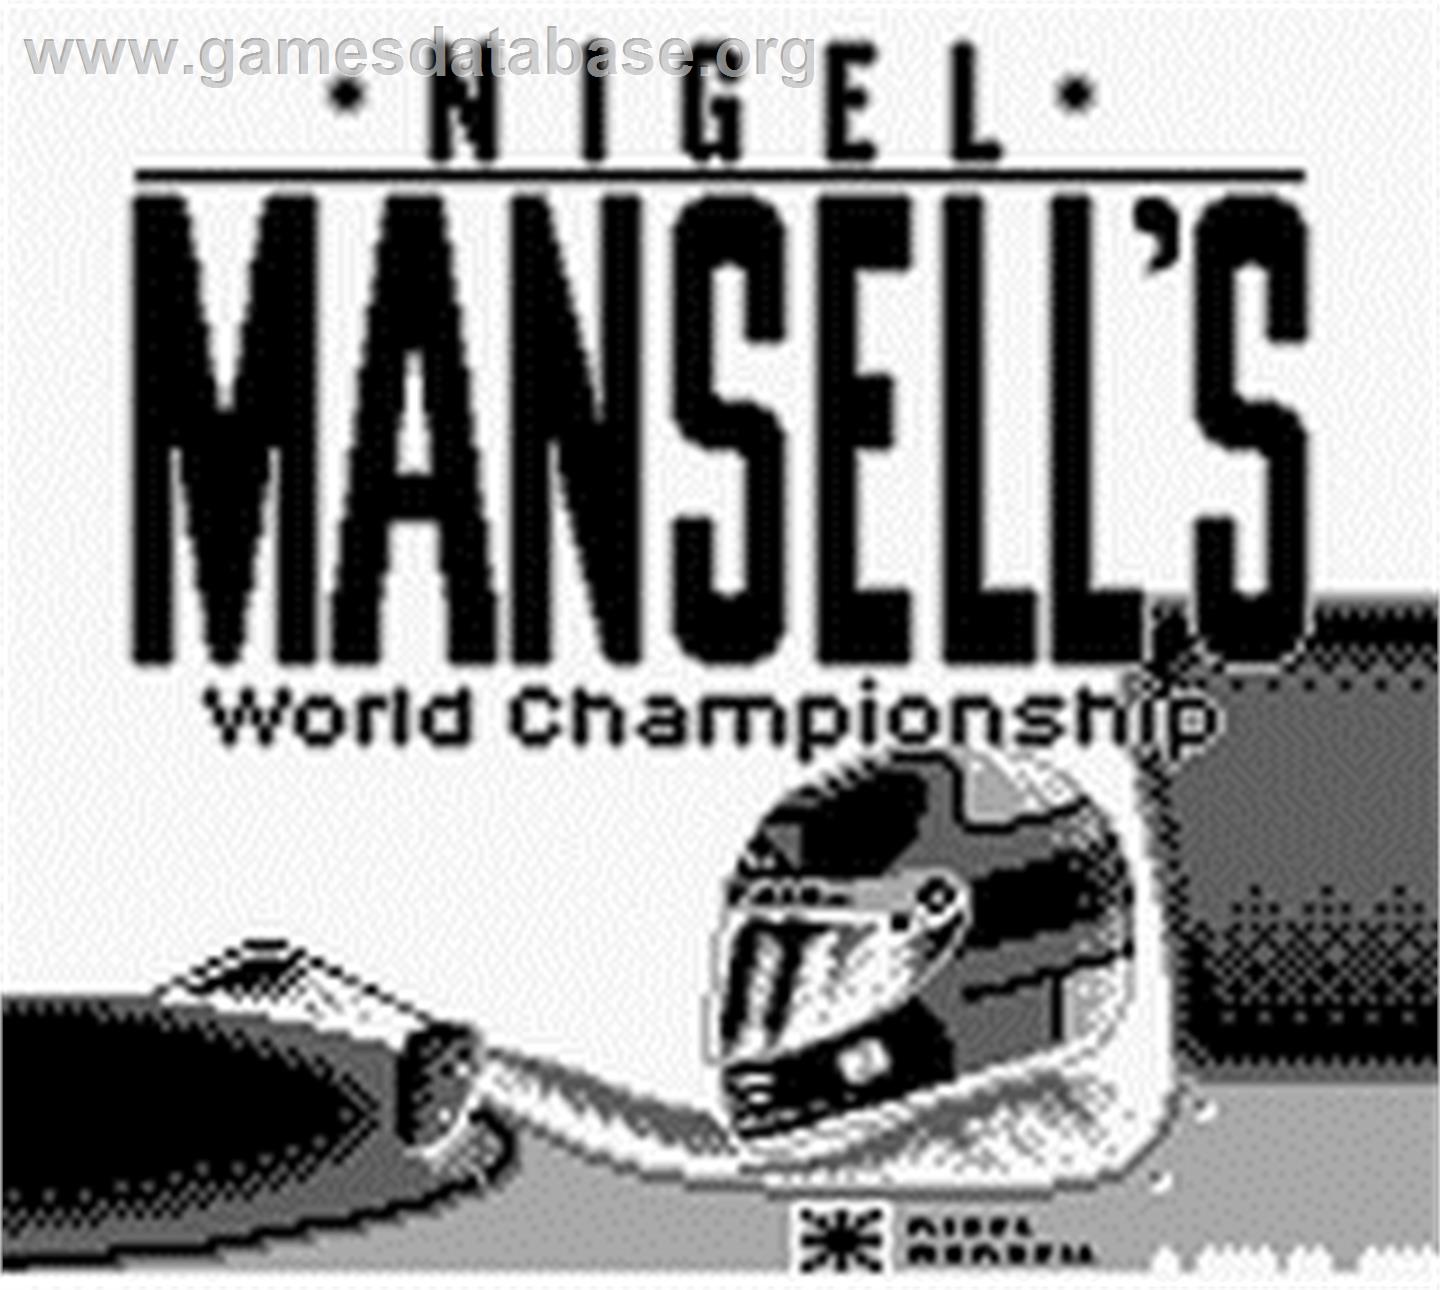 Nigel Mansell's World Championship - Nintendo Game Boy - Artwork - Title Screen